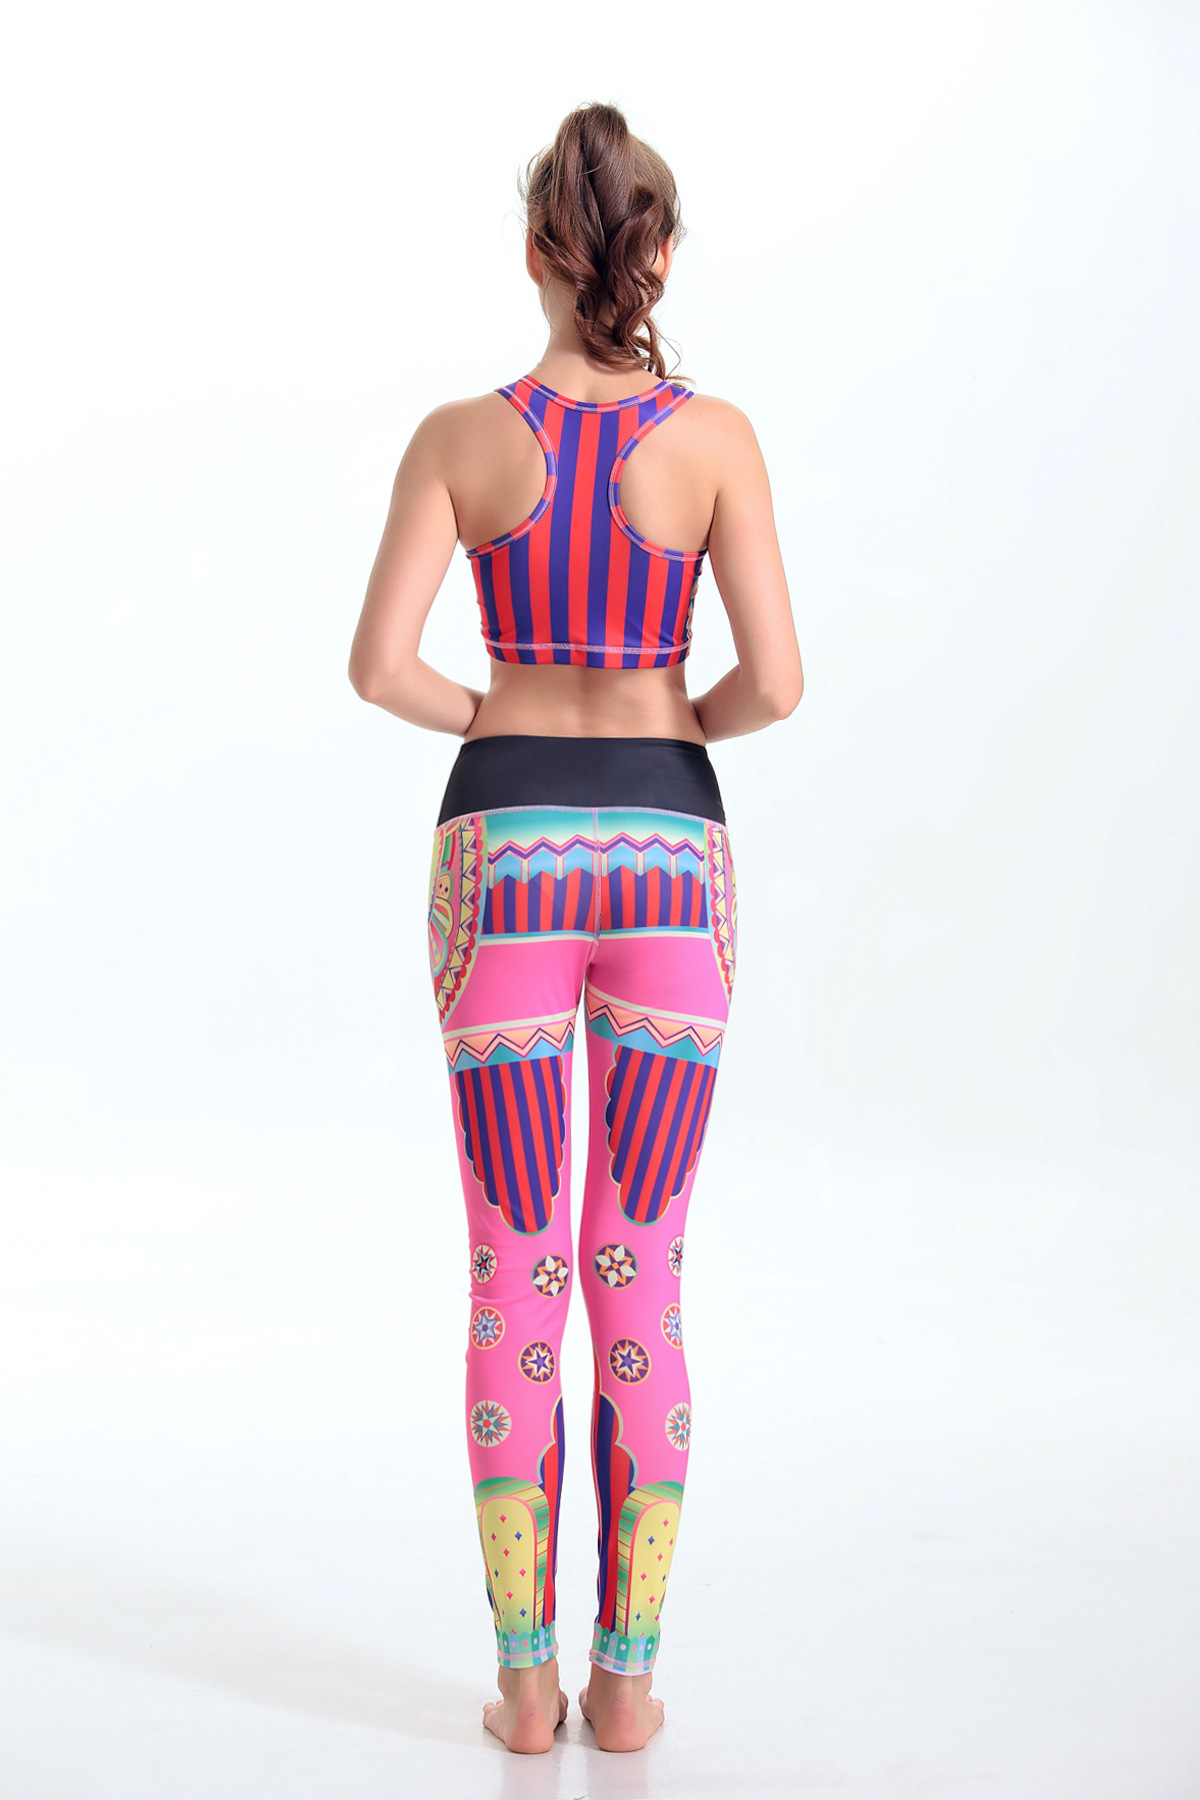 YG1105-1 Women s Printed Athletic Yoga Bra Tops and Legging Pants